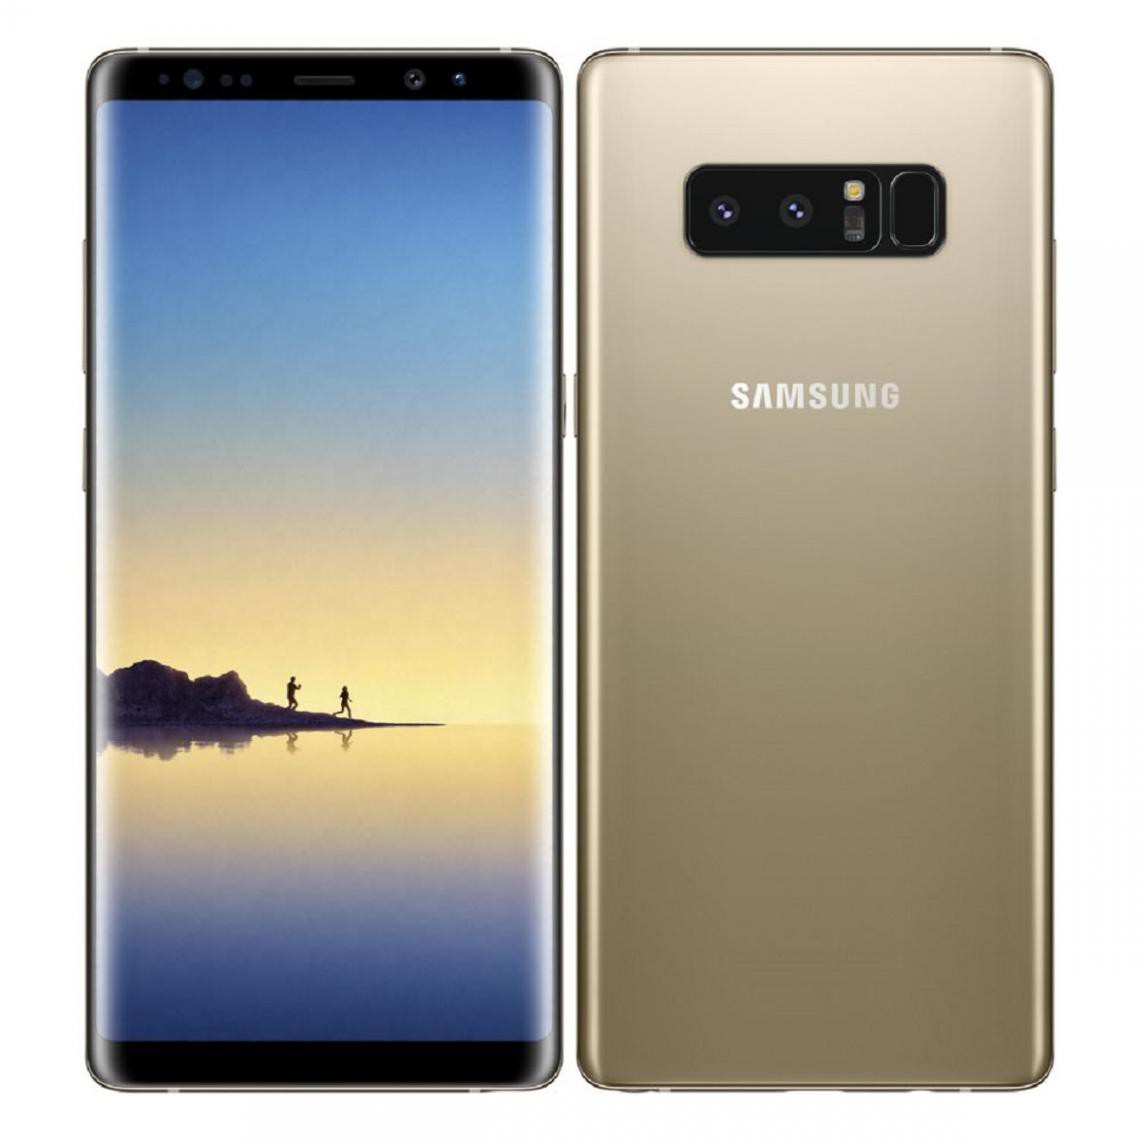 Samsung - Galaxy Note 8 - 64 Go - Or - Reconditionné Très bon état - Smartphone Android